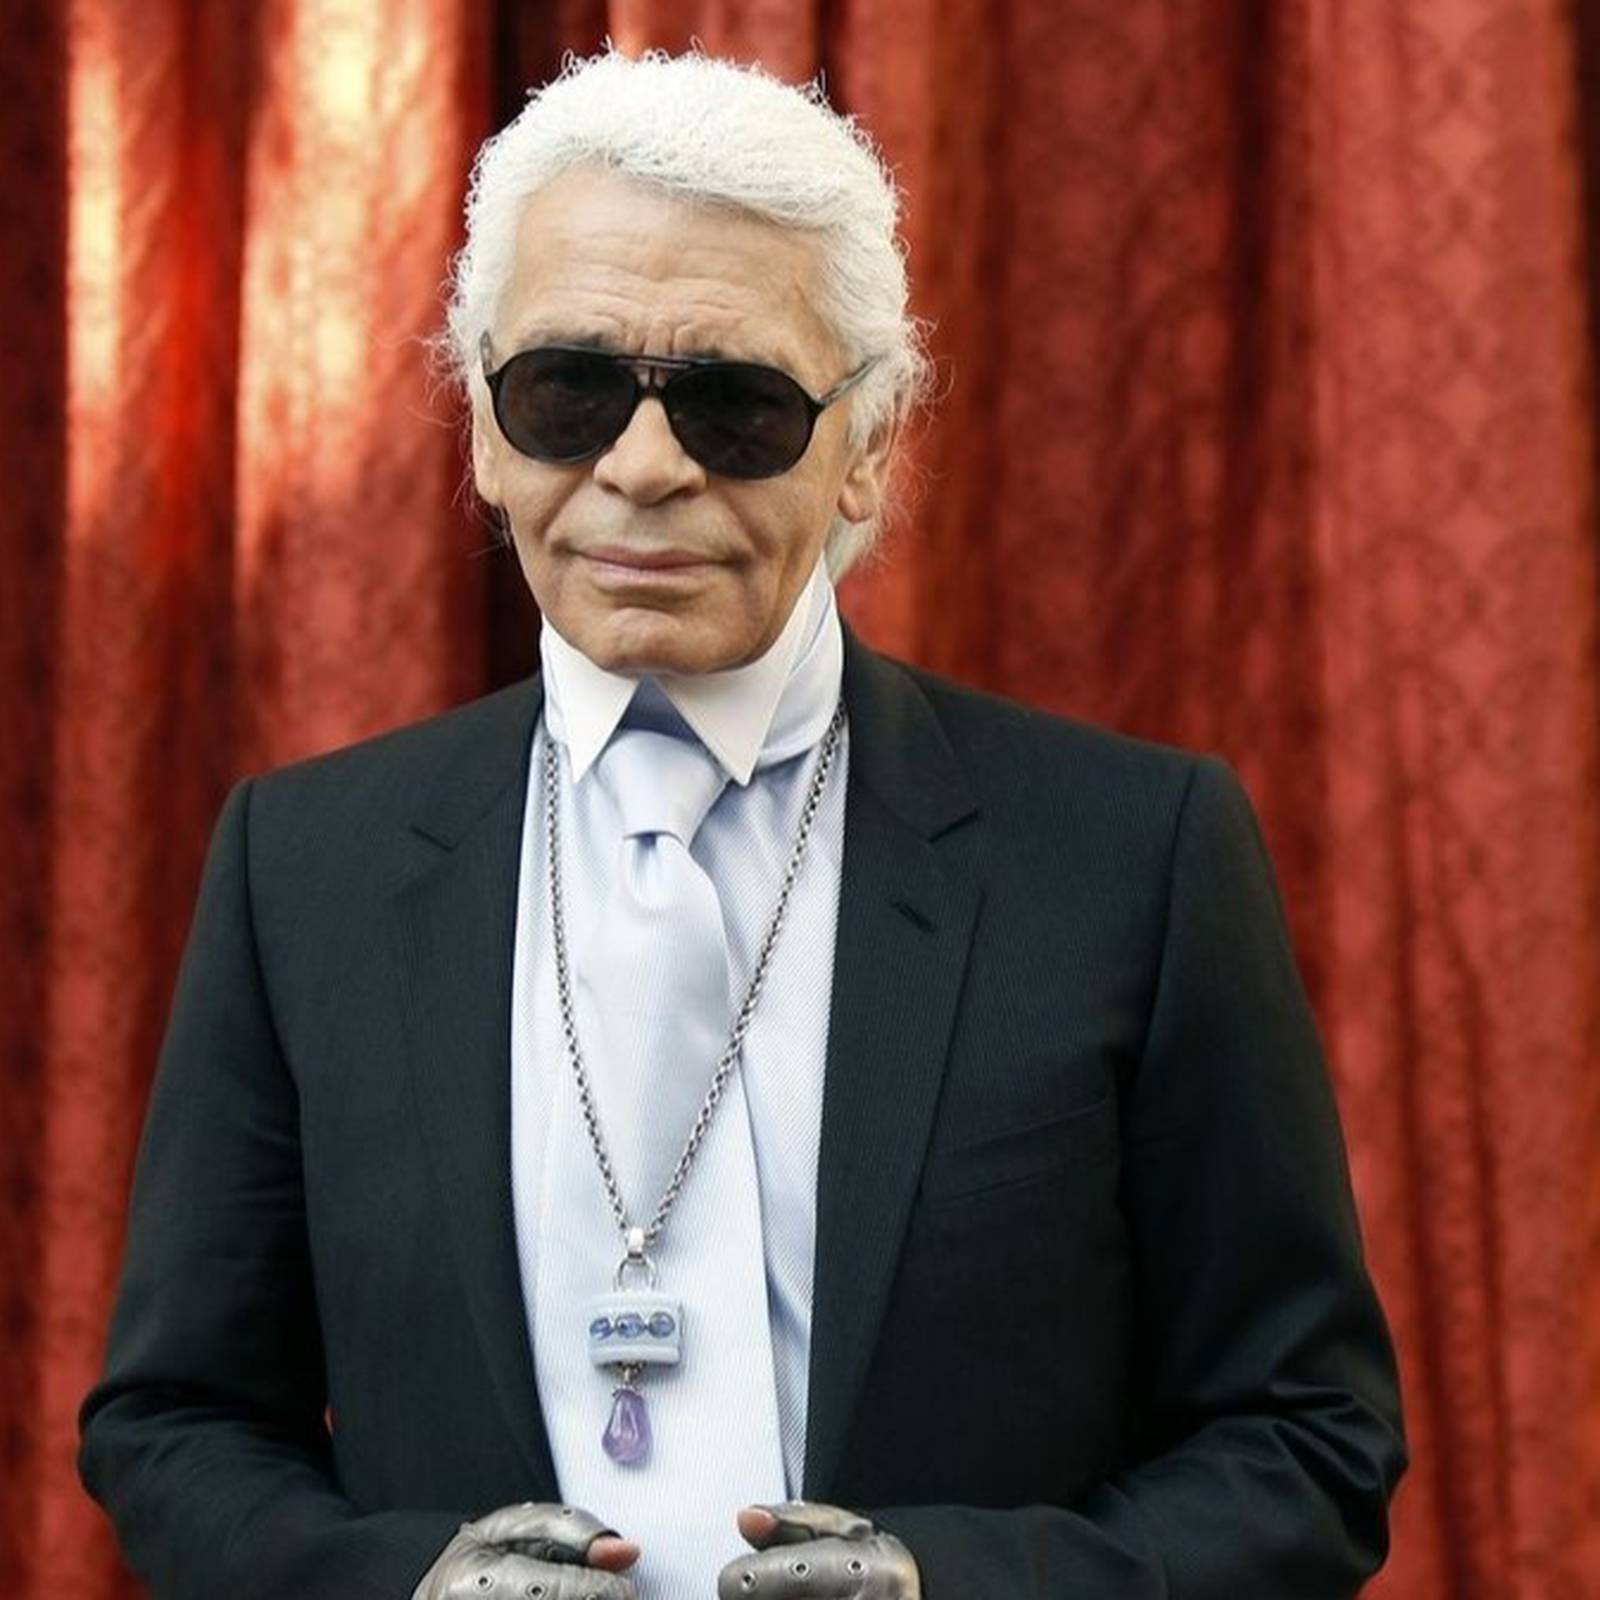 Karl Lagerfeld Dies At 85: Stars Remember The Legendary Fashion Designer